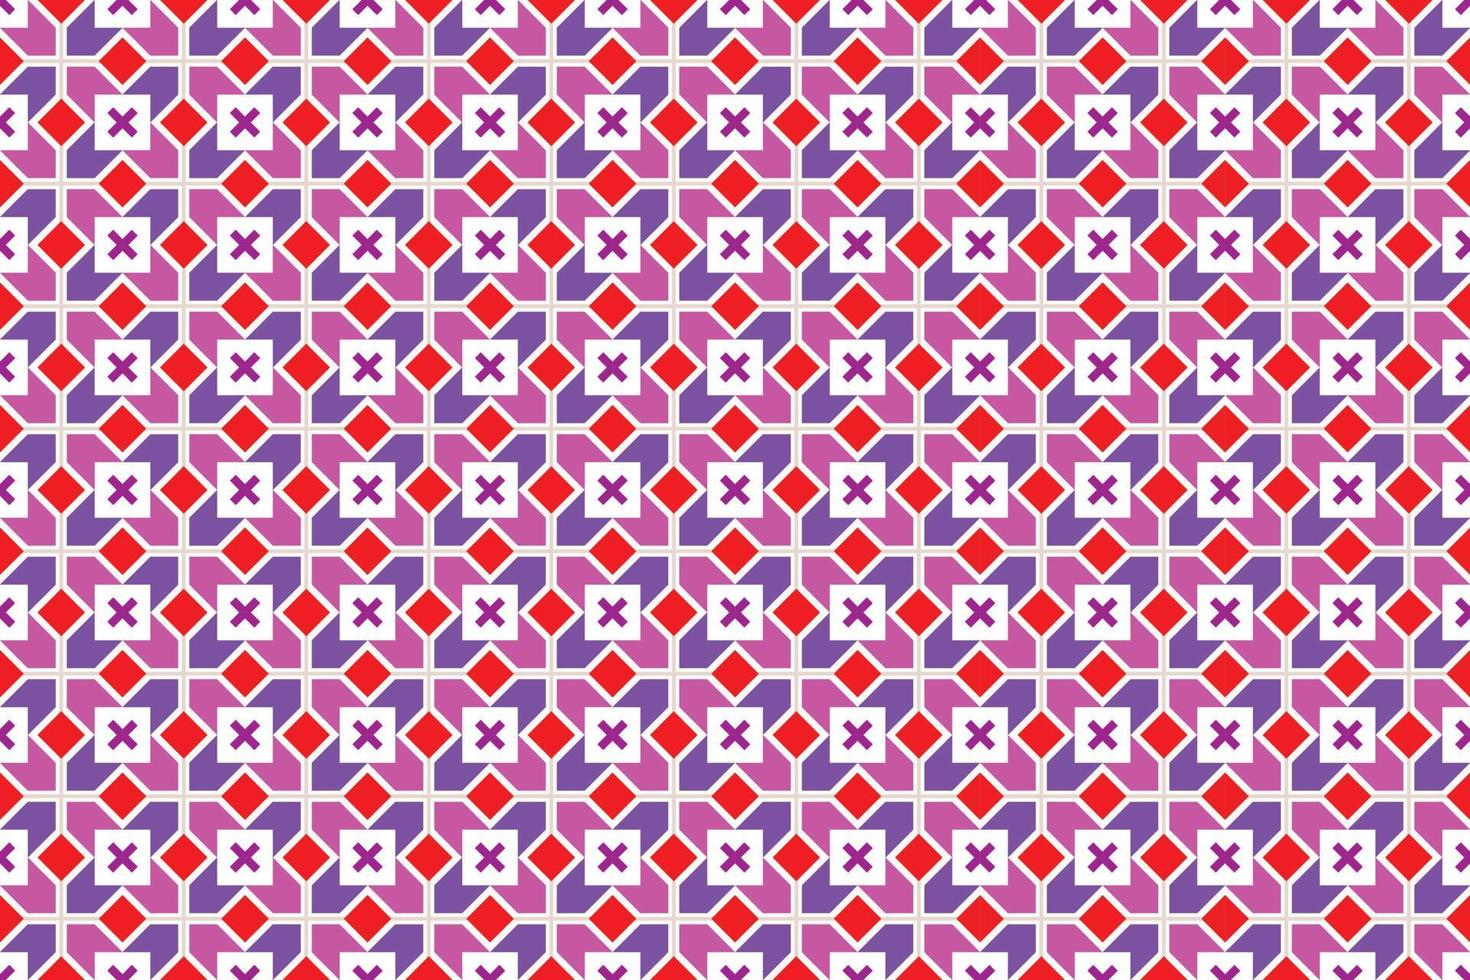 Geometric vector seamless pattern